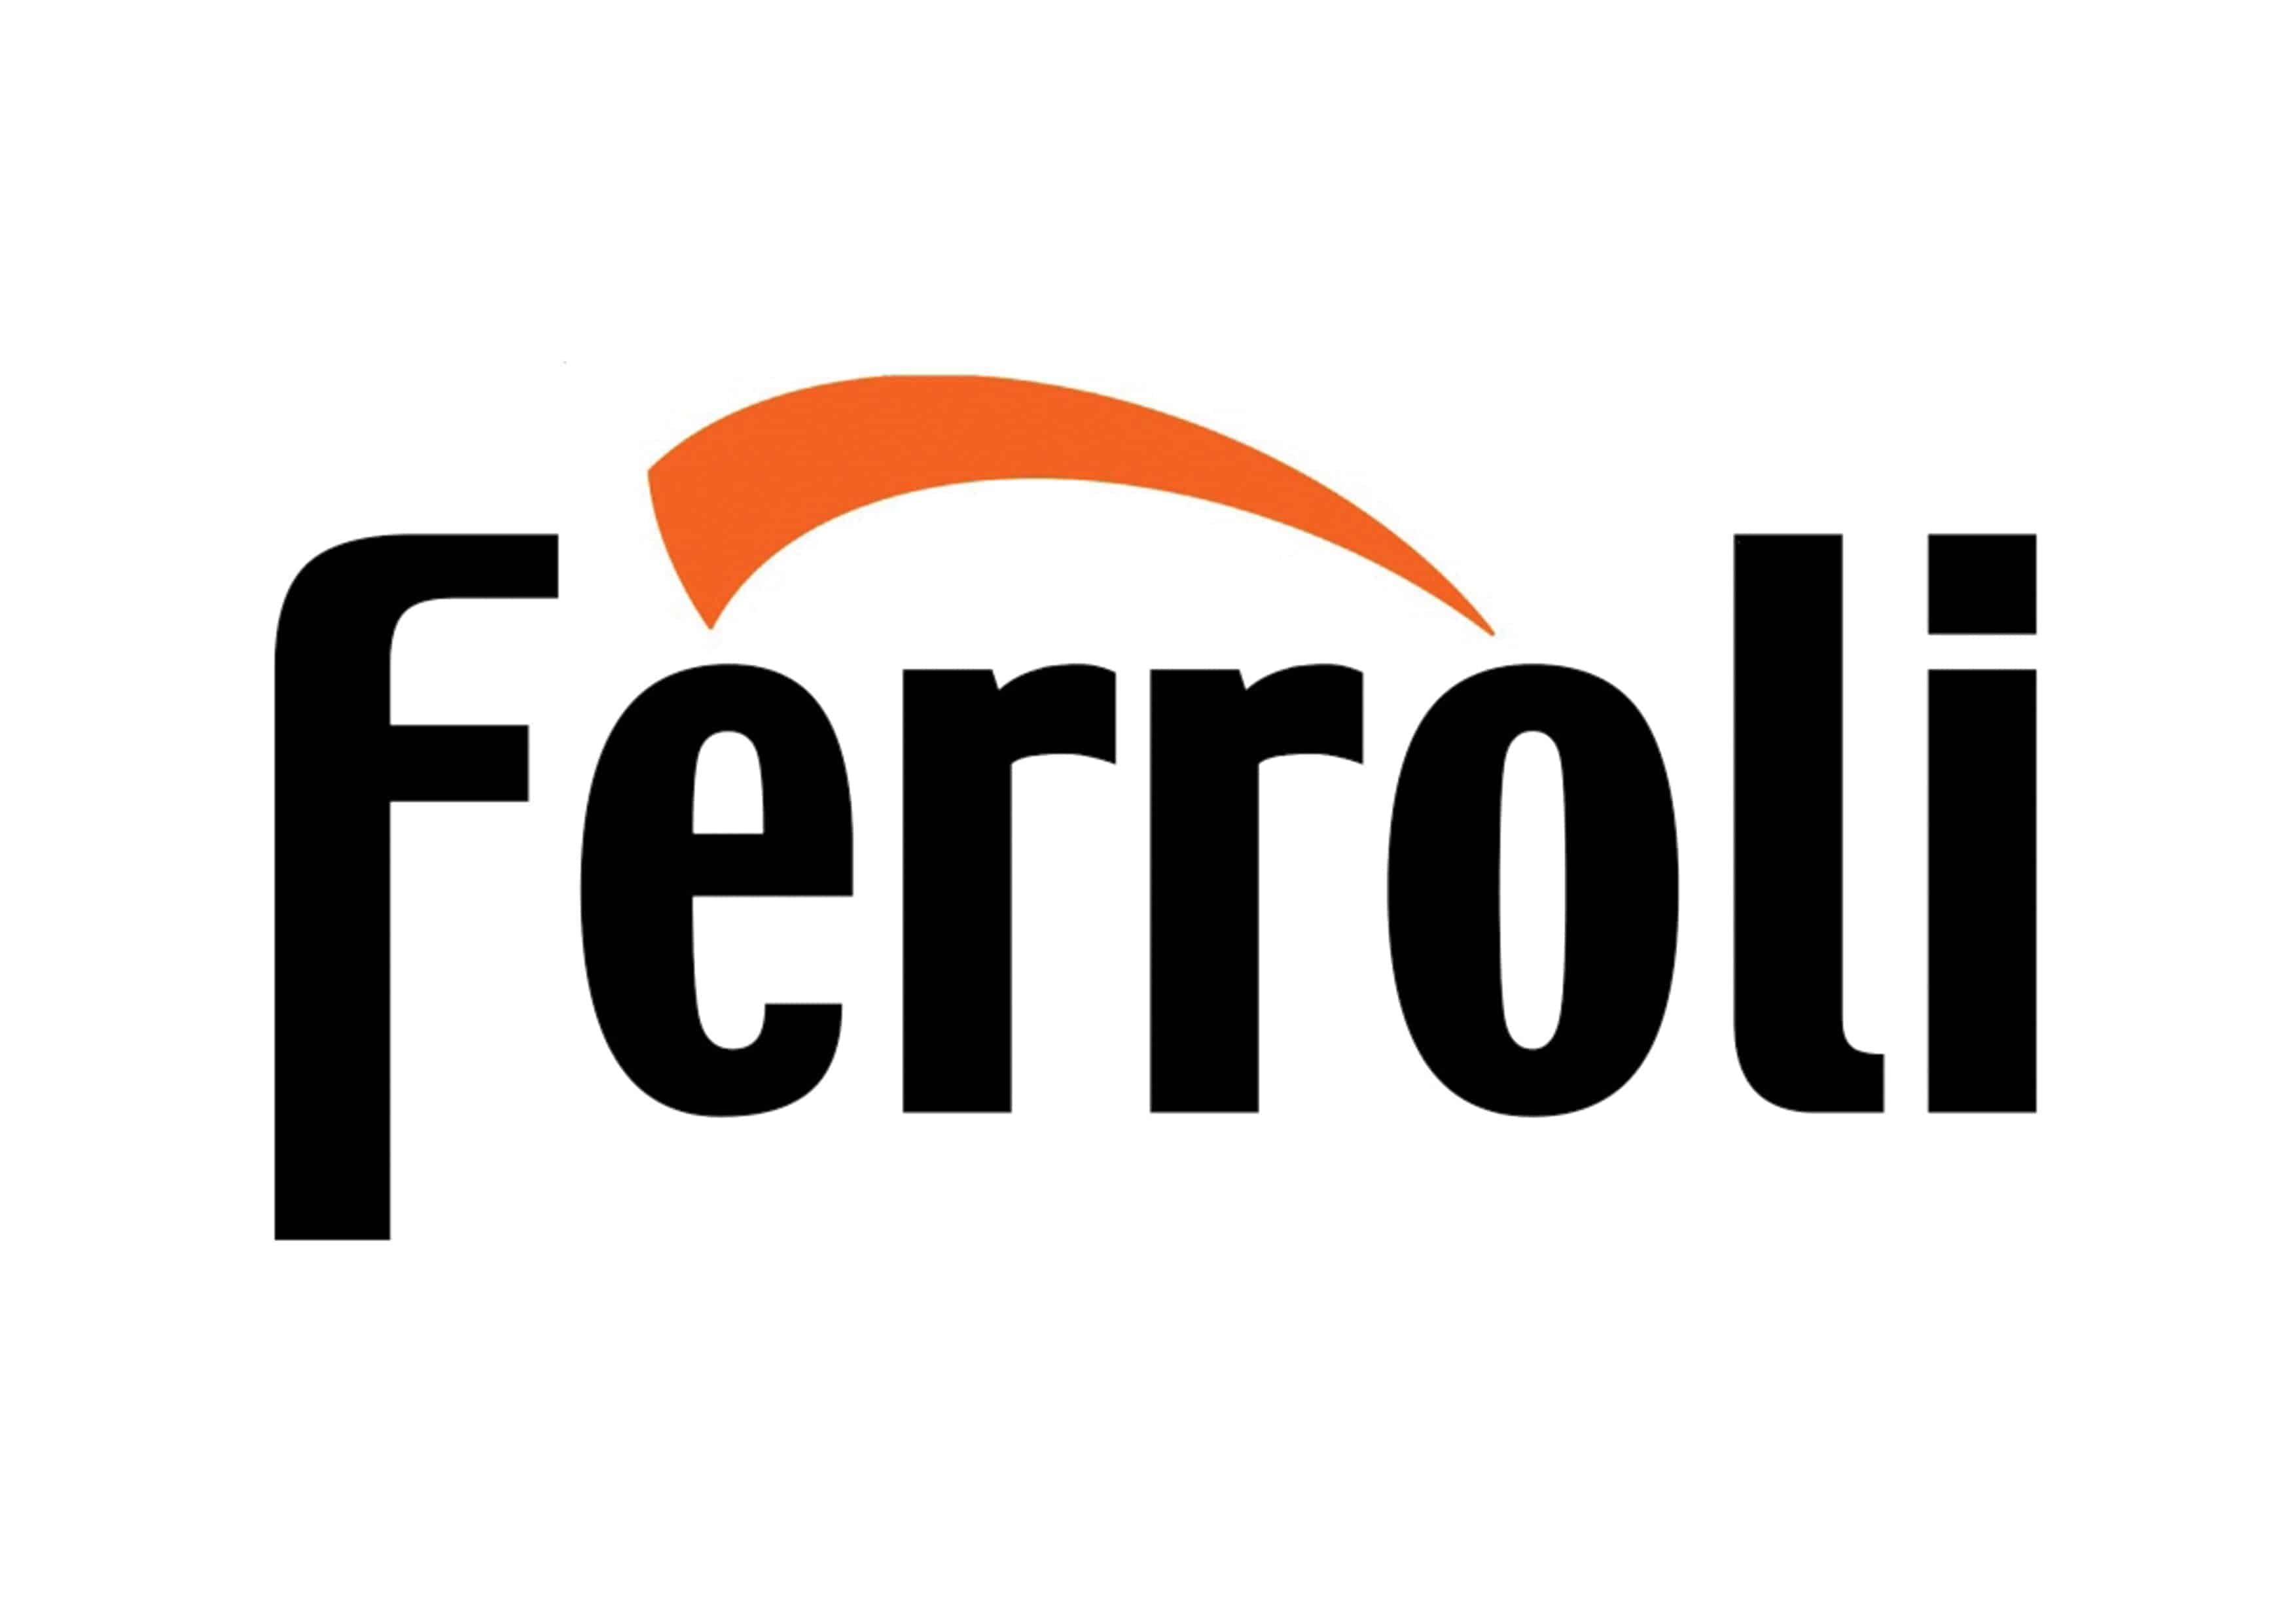 Ferroli Logo